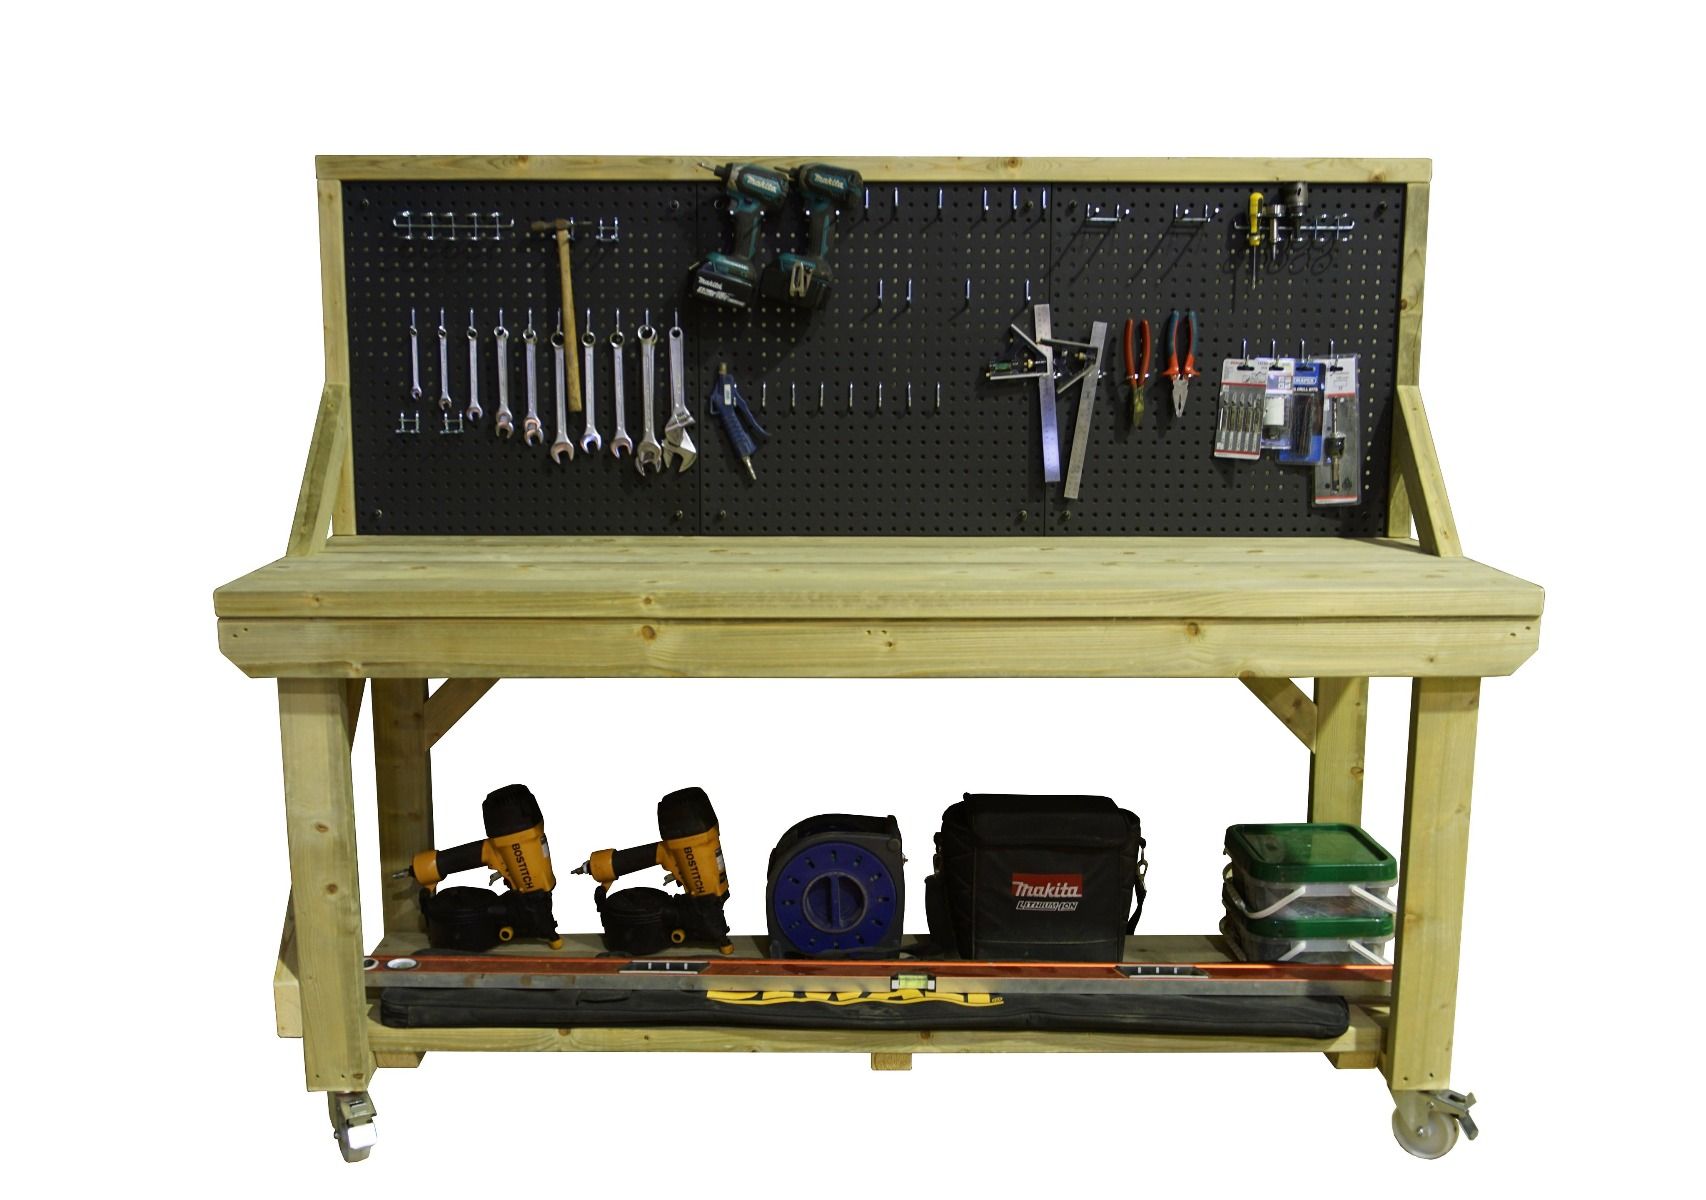 Heavy Duty Workbench Kit For Organizing The Garage DIY Table Shelves Storage